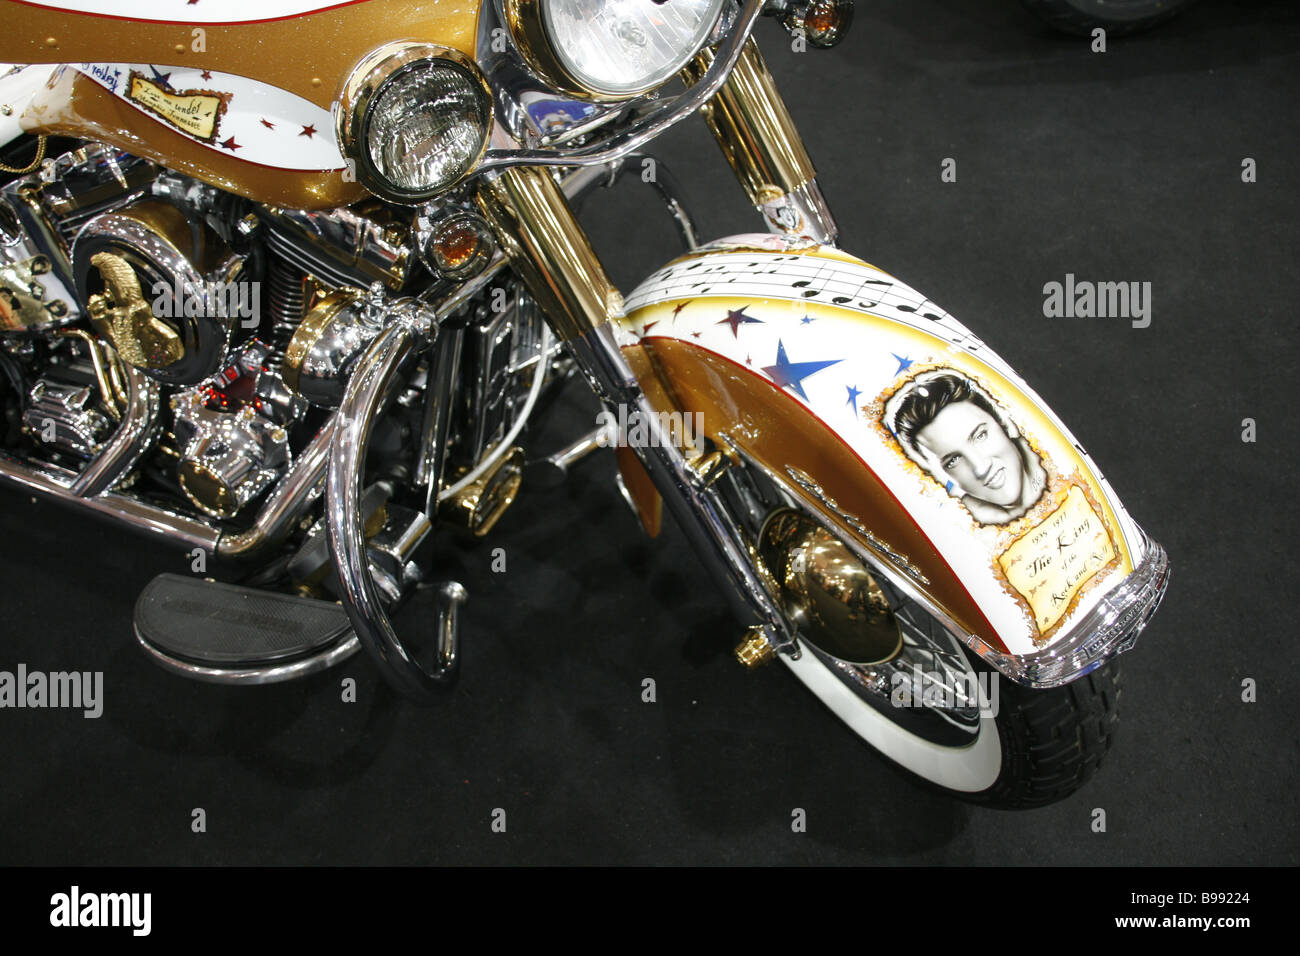 Elvis Presley Harley Davison sur mesure type moto à motor show Photo Stock  - Alamy